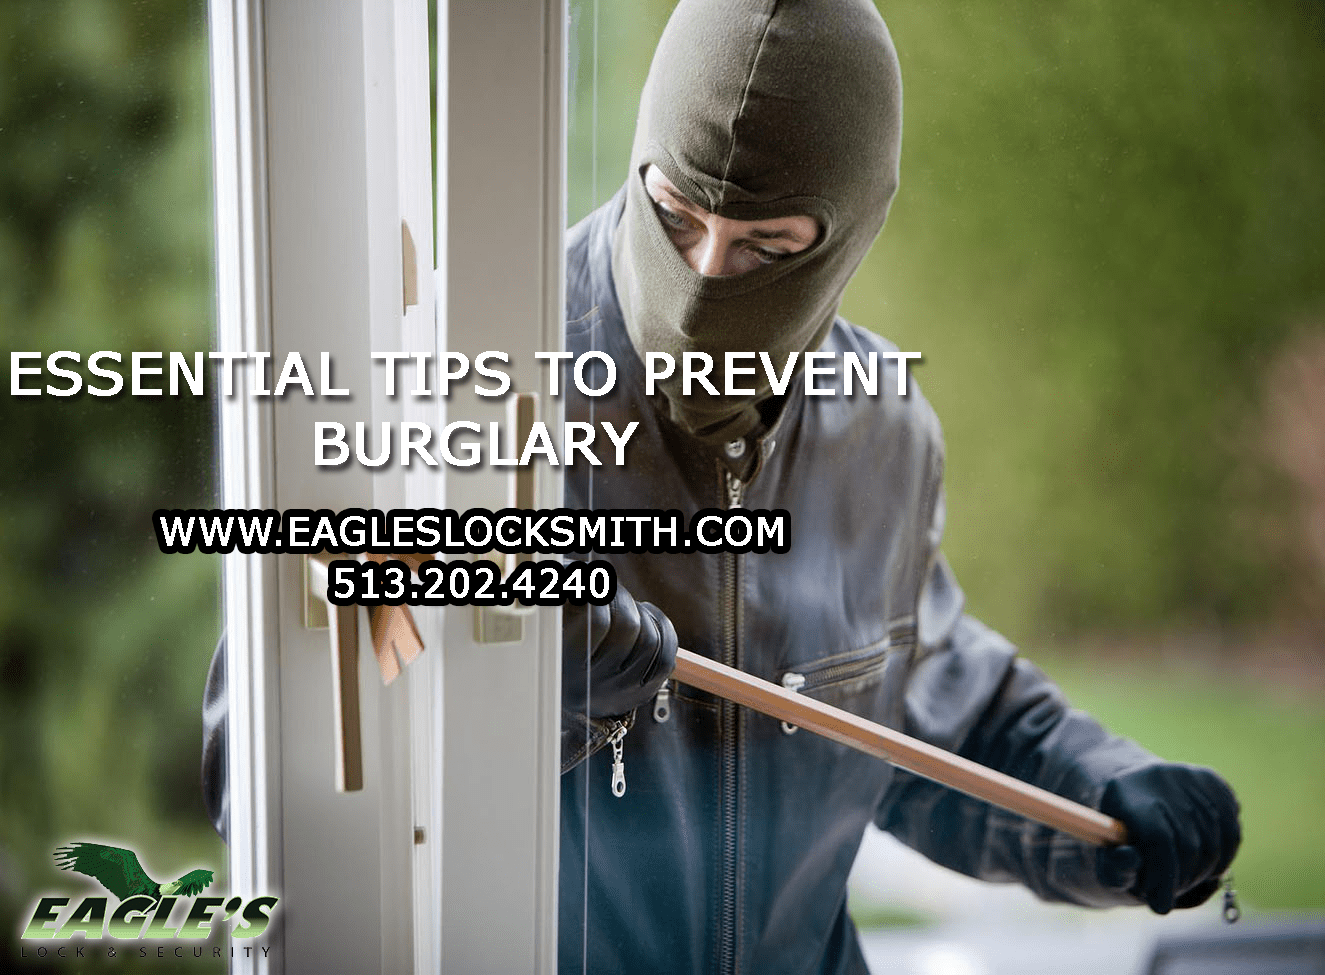 How Can I Protect My Business From Burglary? - Eagle's Locksmith Cincinnati